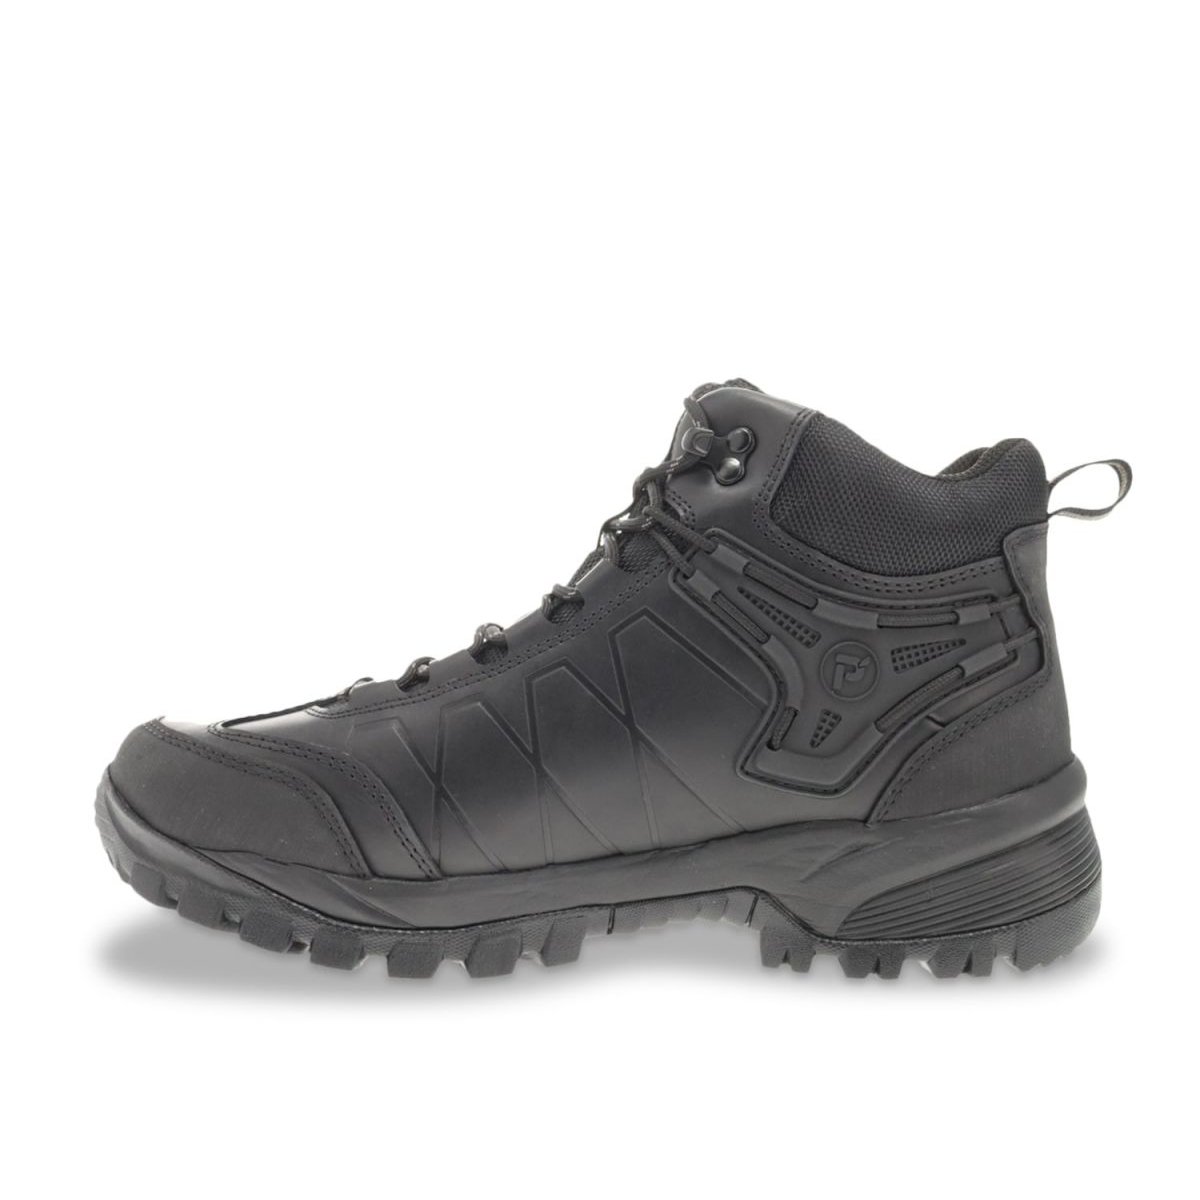 Propet Men's Ridge Walker Force Hiking Boots Black - MBA052LBLK BLACK - BLACK, 8 XX-Wide